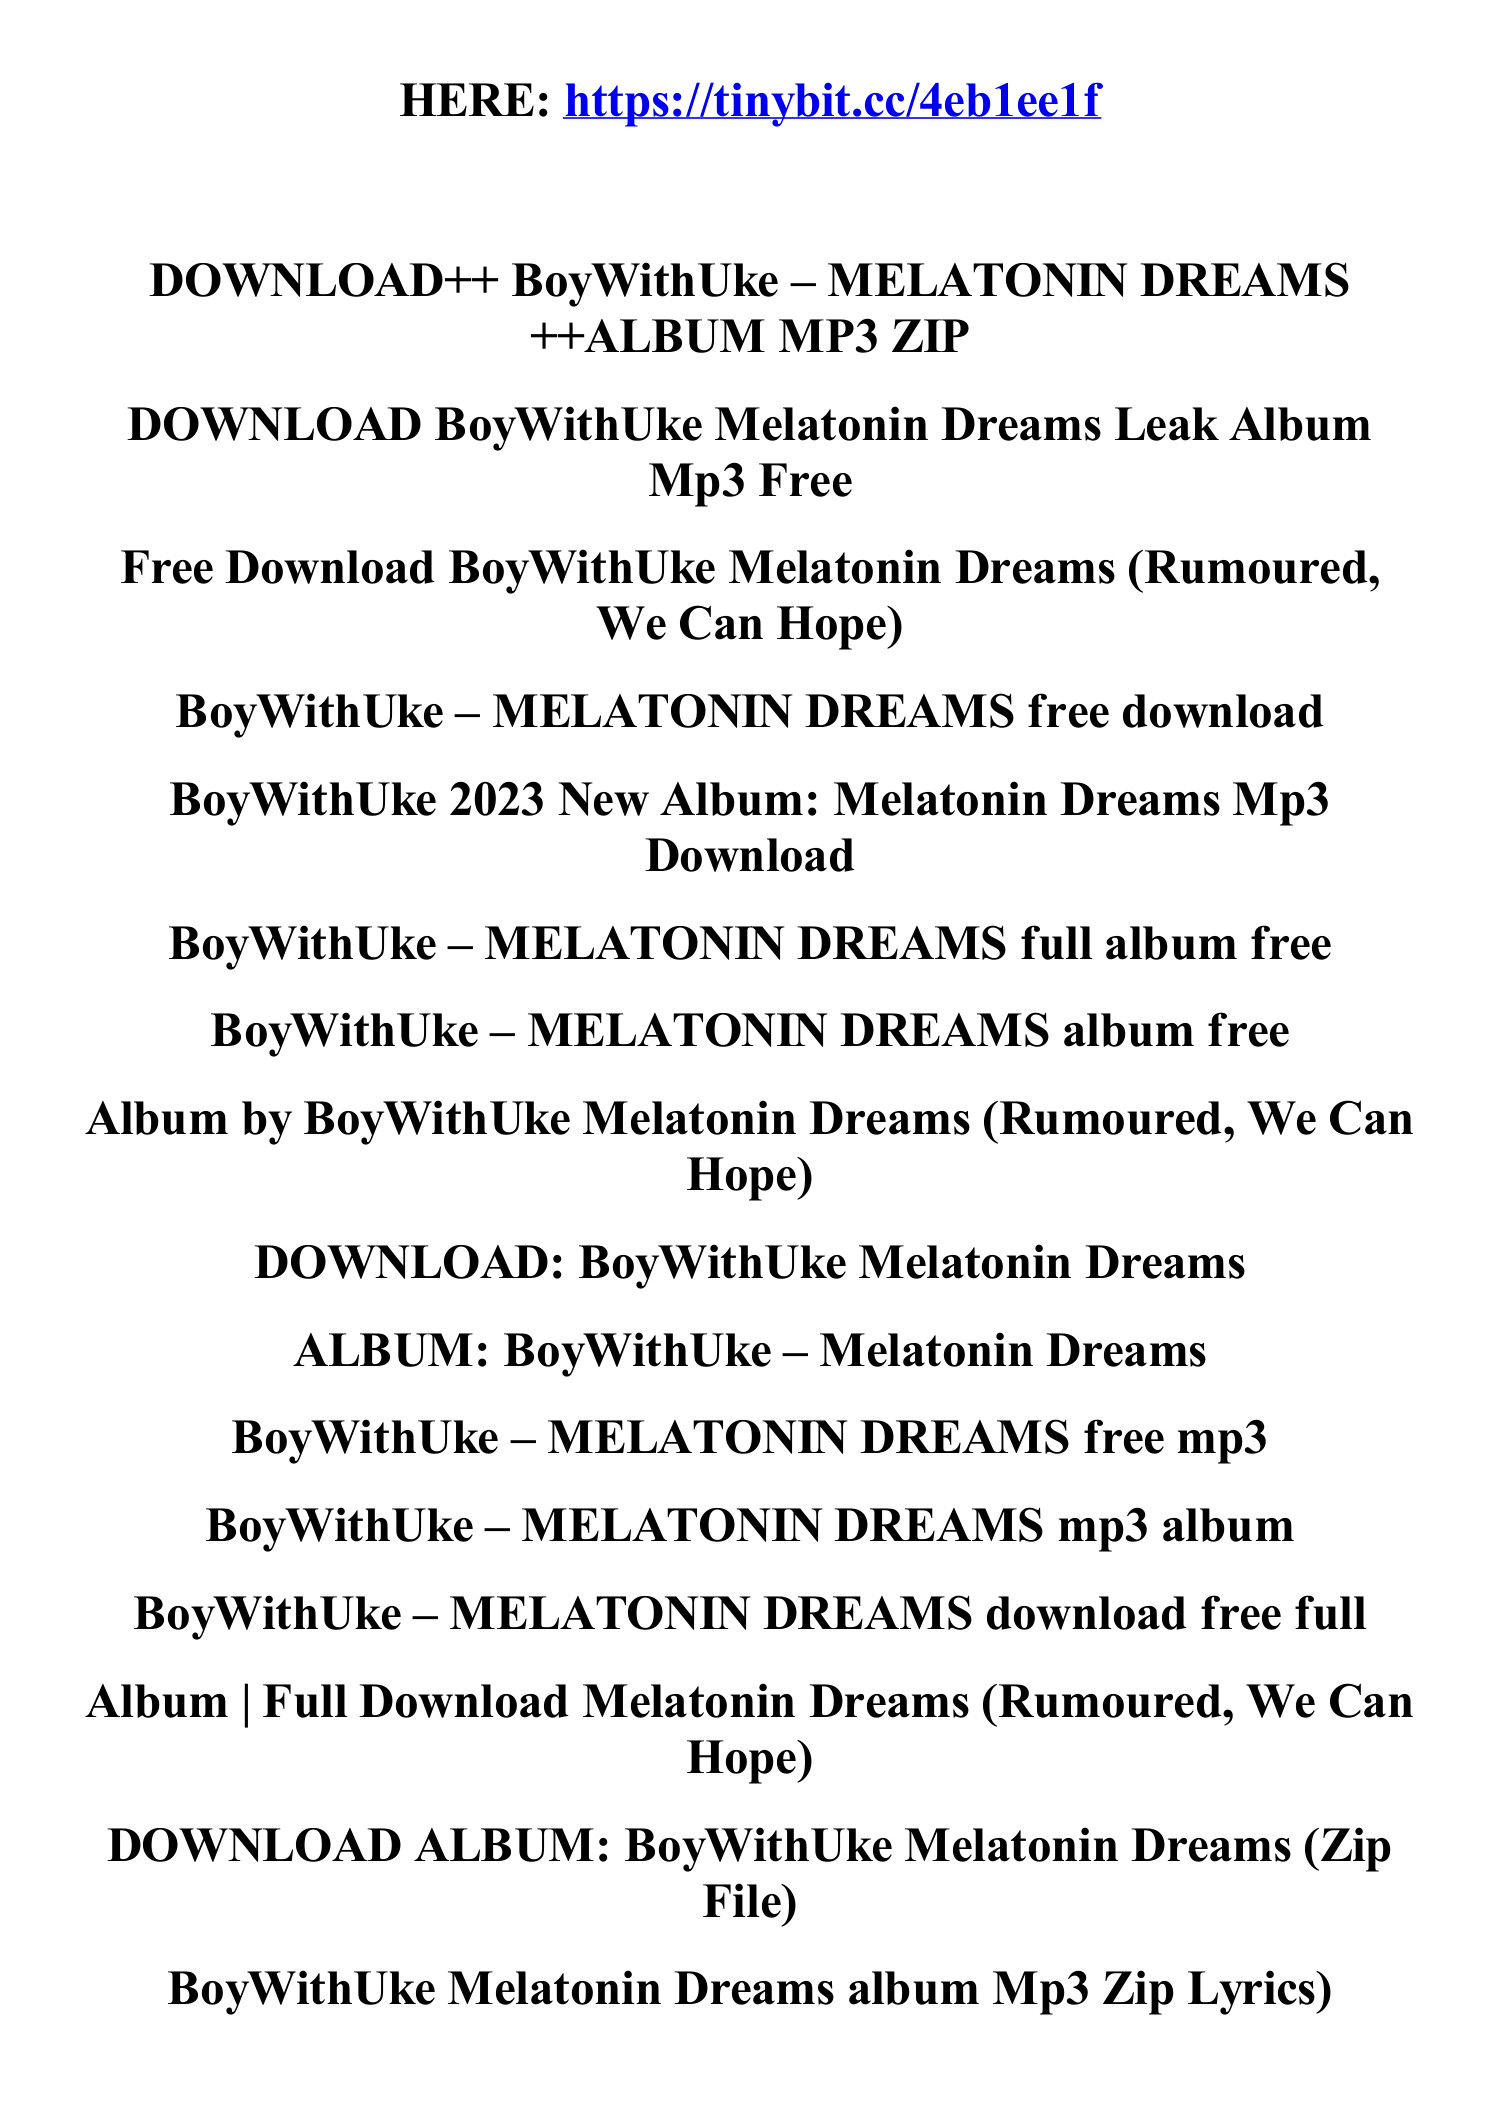 Melatonin Dreams - Album by BoyWithUke